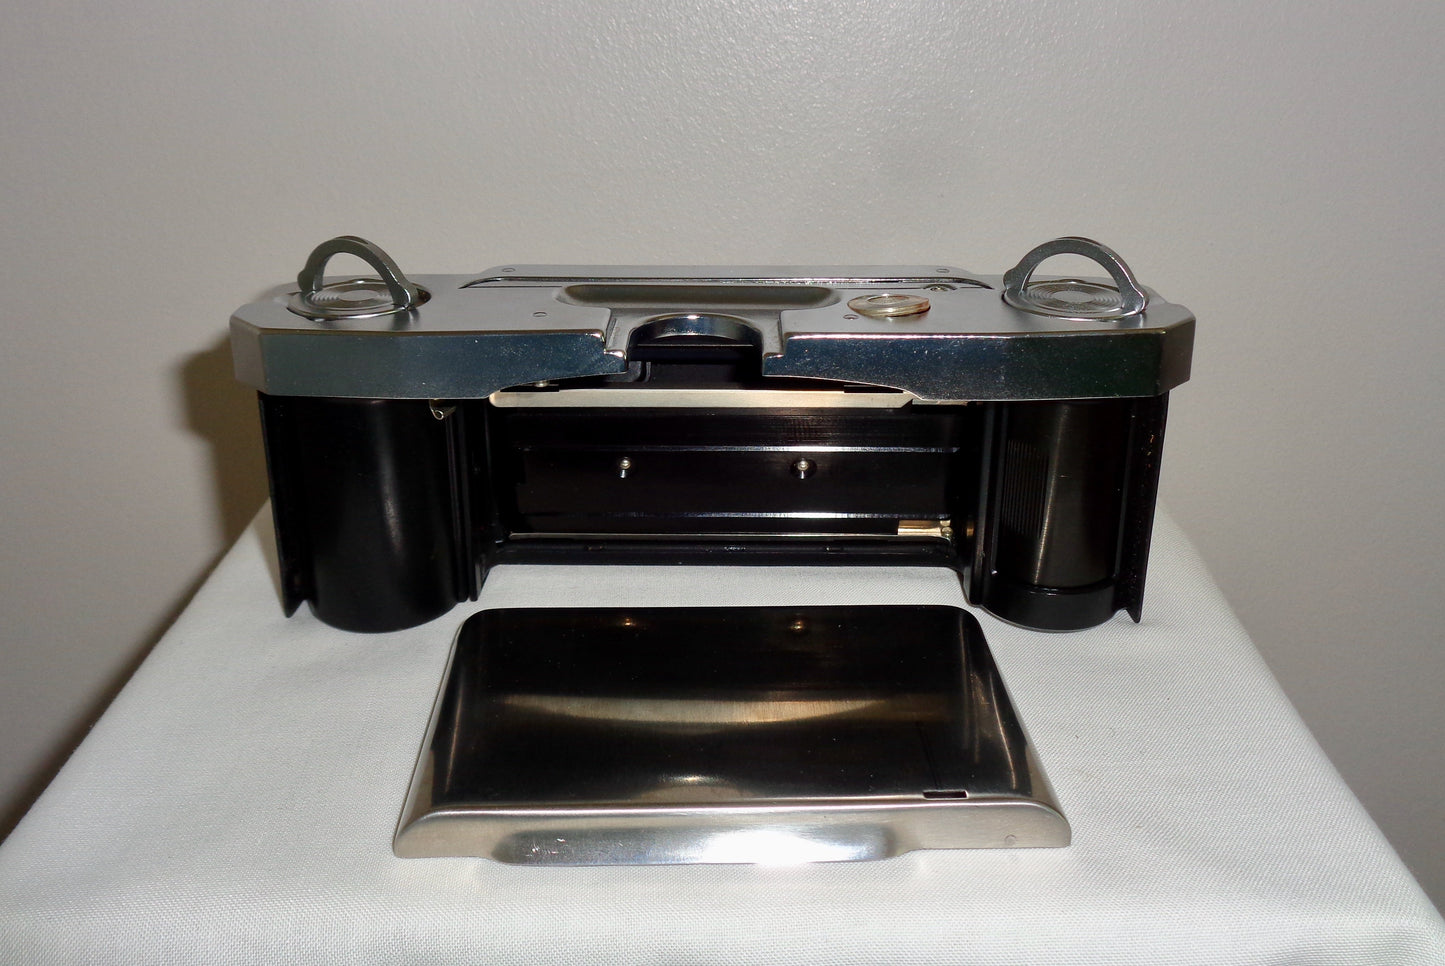 1964 Zeiss IKON Contarex Bullseye 35mm SLR Camera Body With Interchangeable Back & Dark Slide